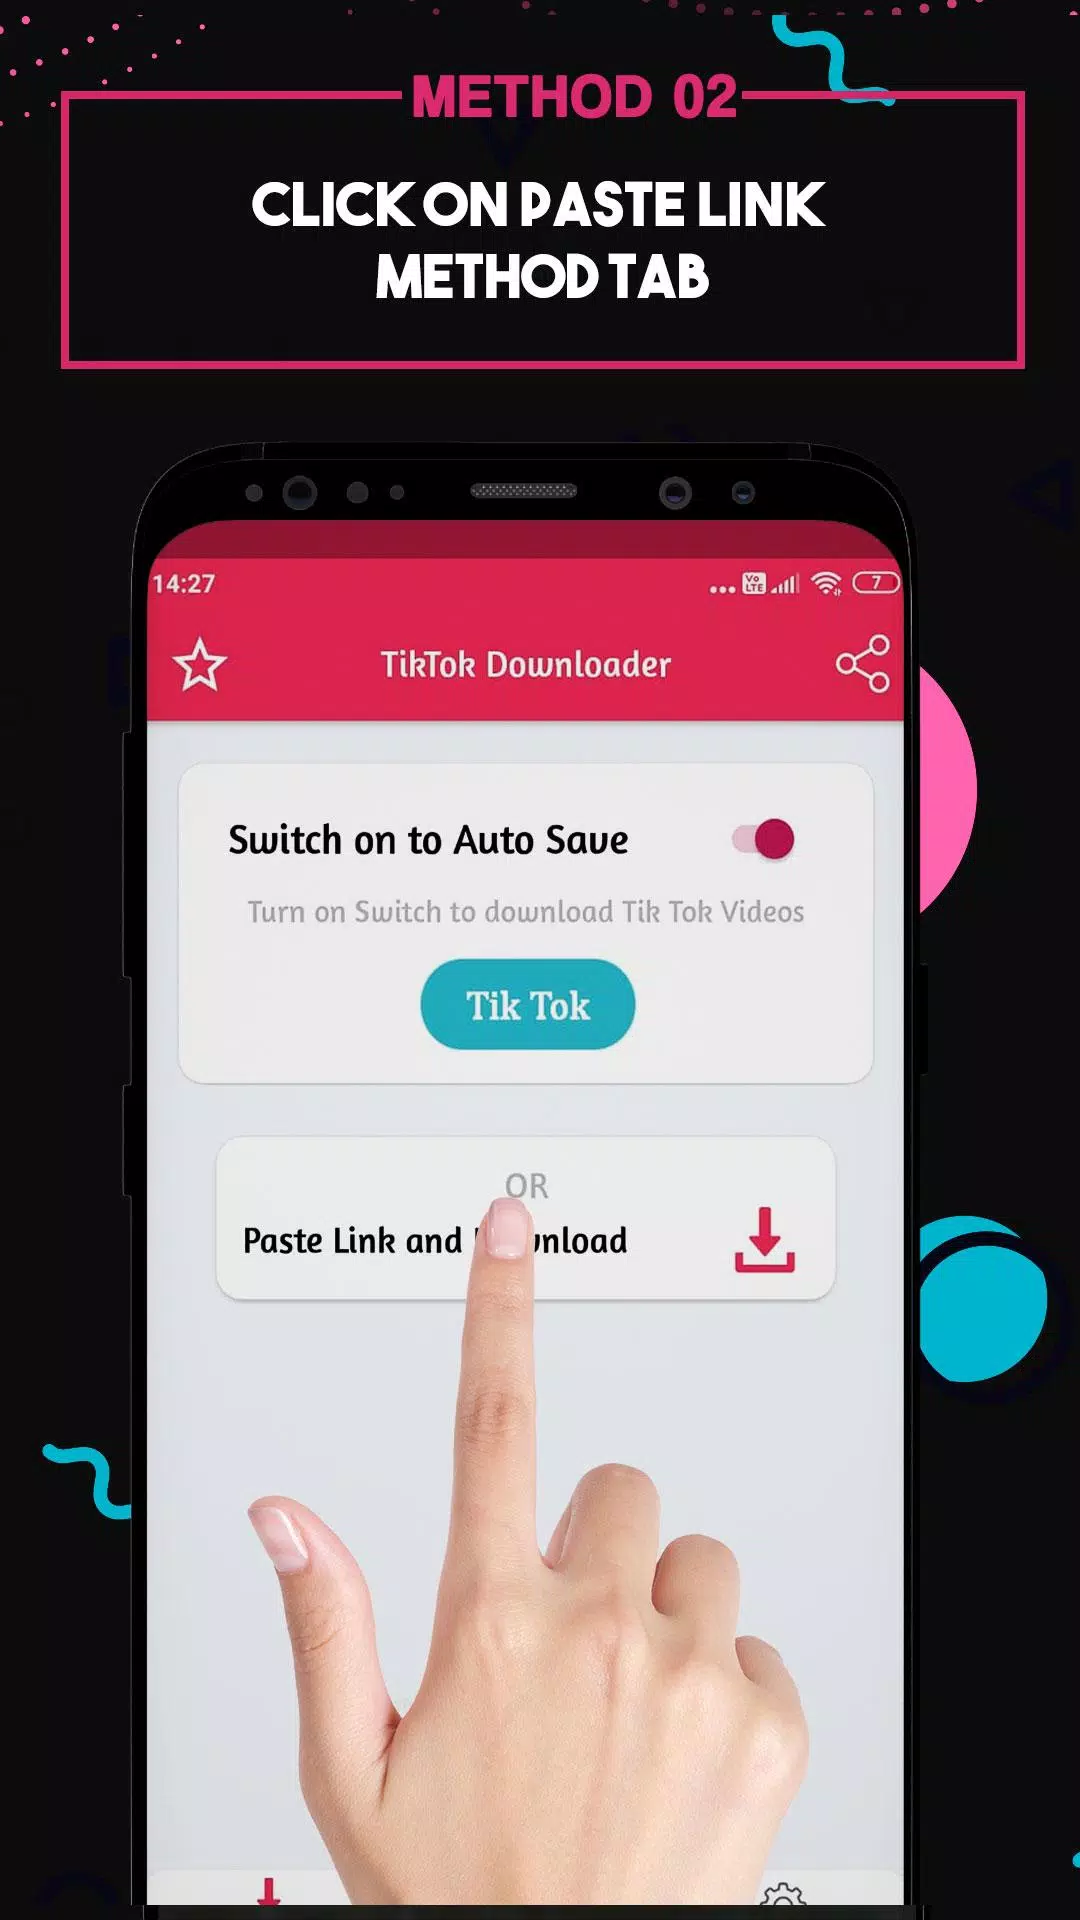 TikTok Video Download  Download TikTok Videos Without Watermark